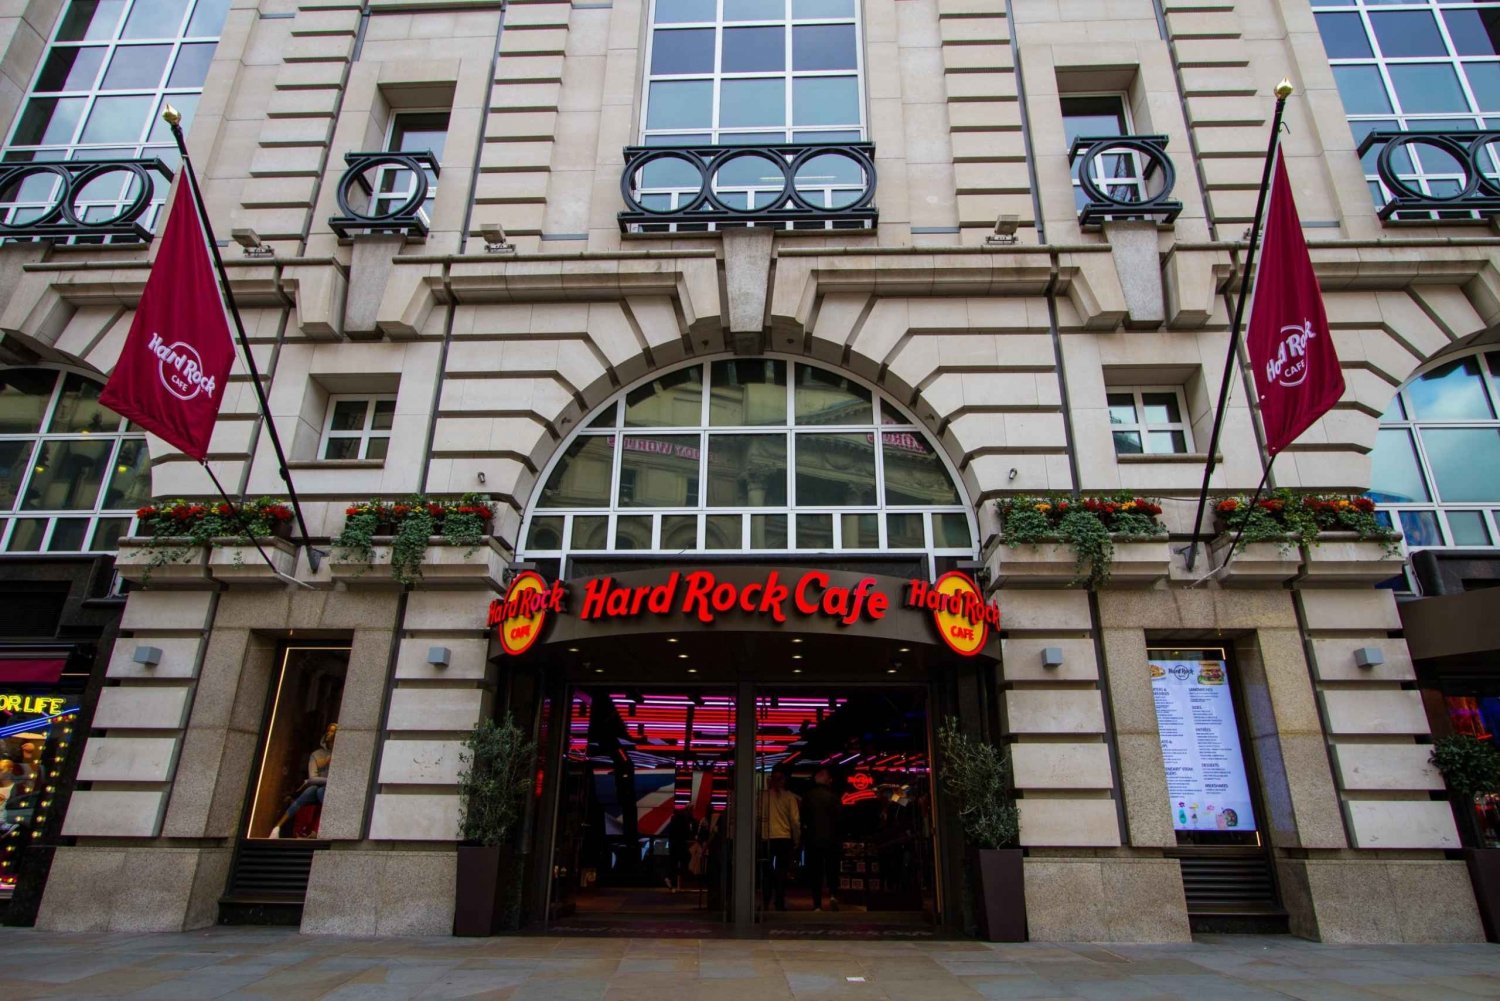 Picadilly Circus: Almoço ou jantar com menu fixo do Hard Rock Cafe